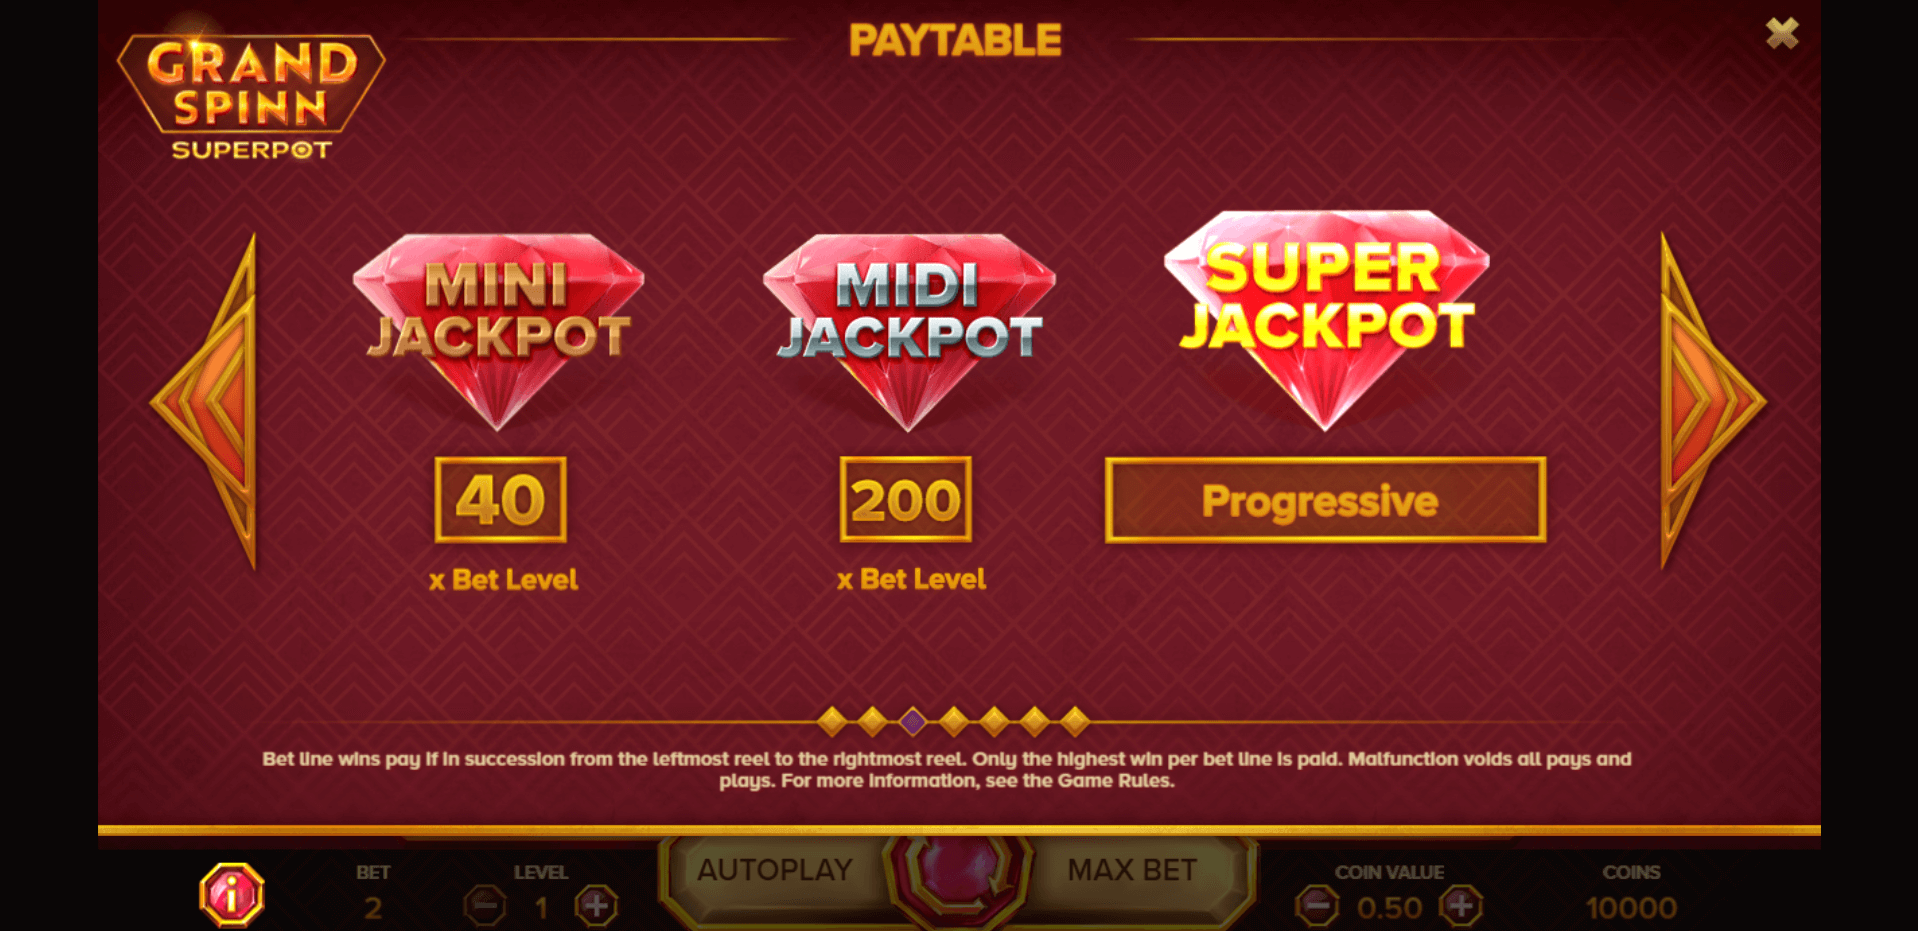 grand spinn superpot slot machine detail image 2